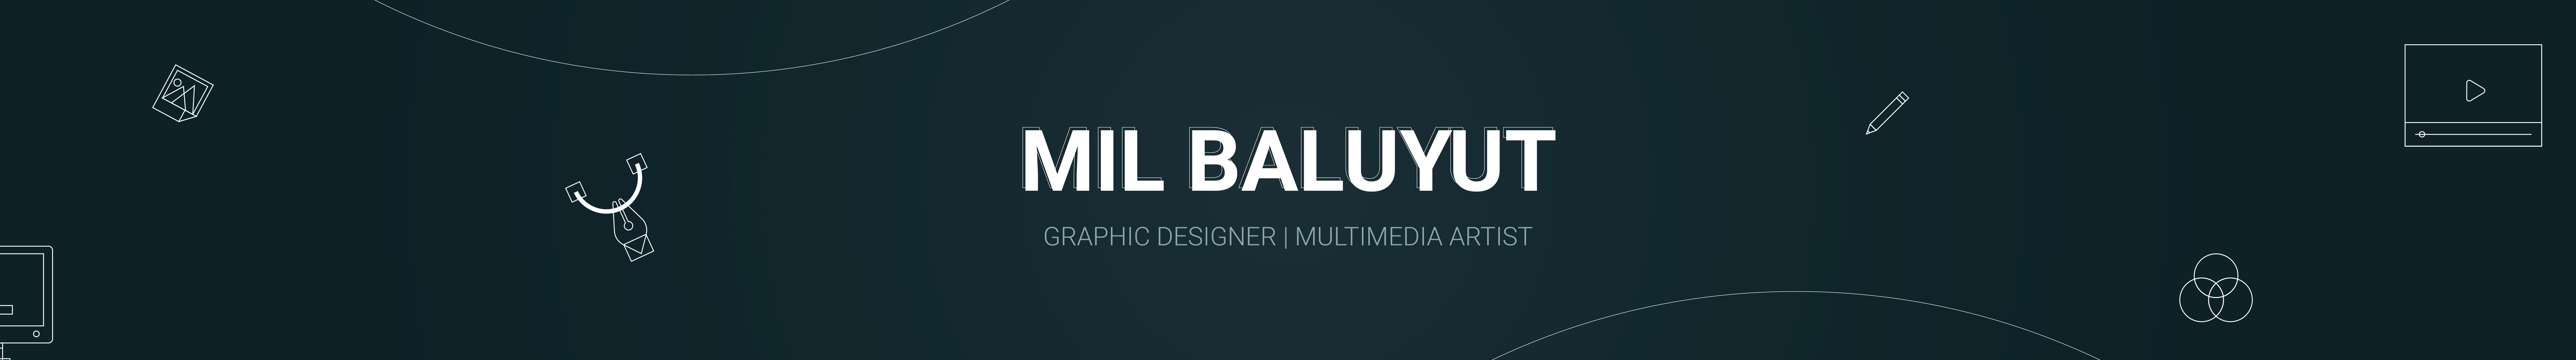 Banner de perfil de Mil Baluyut